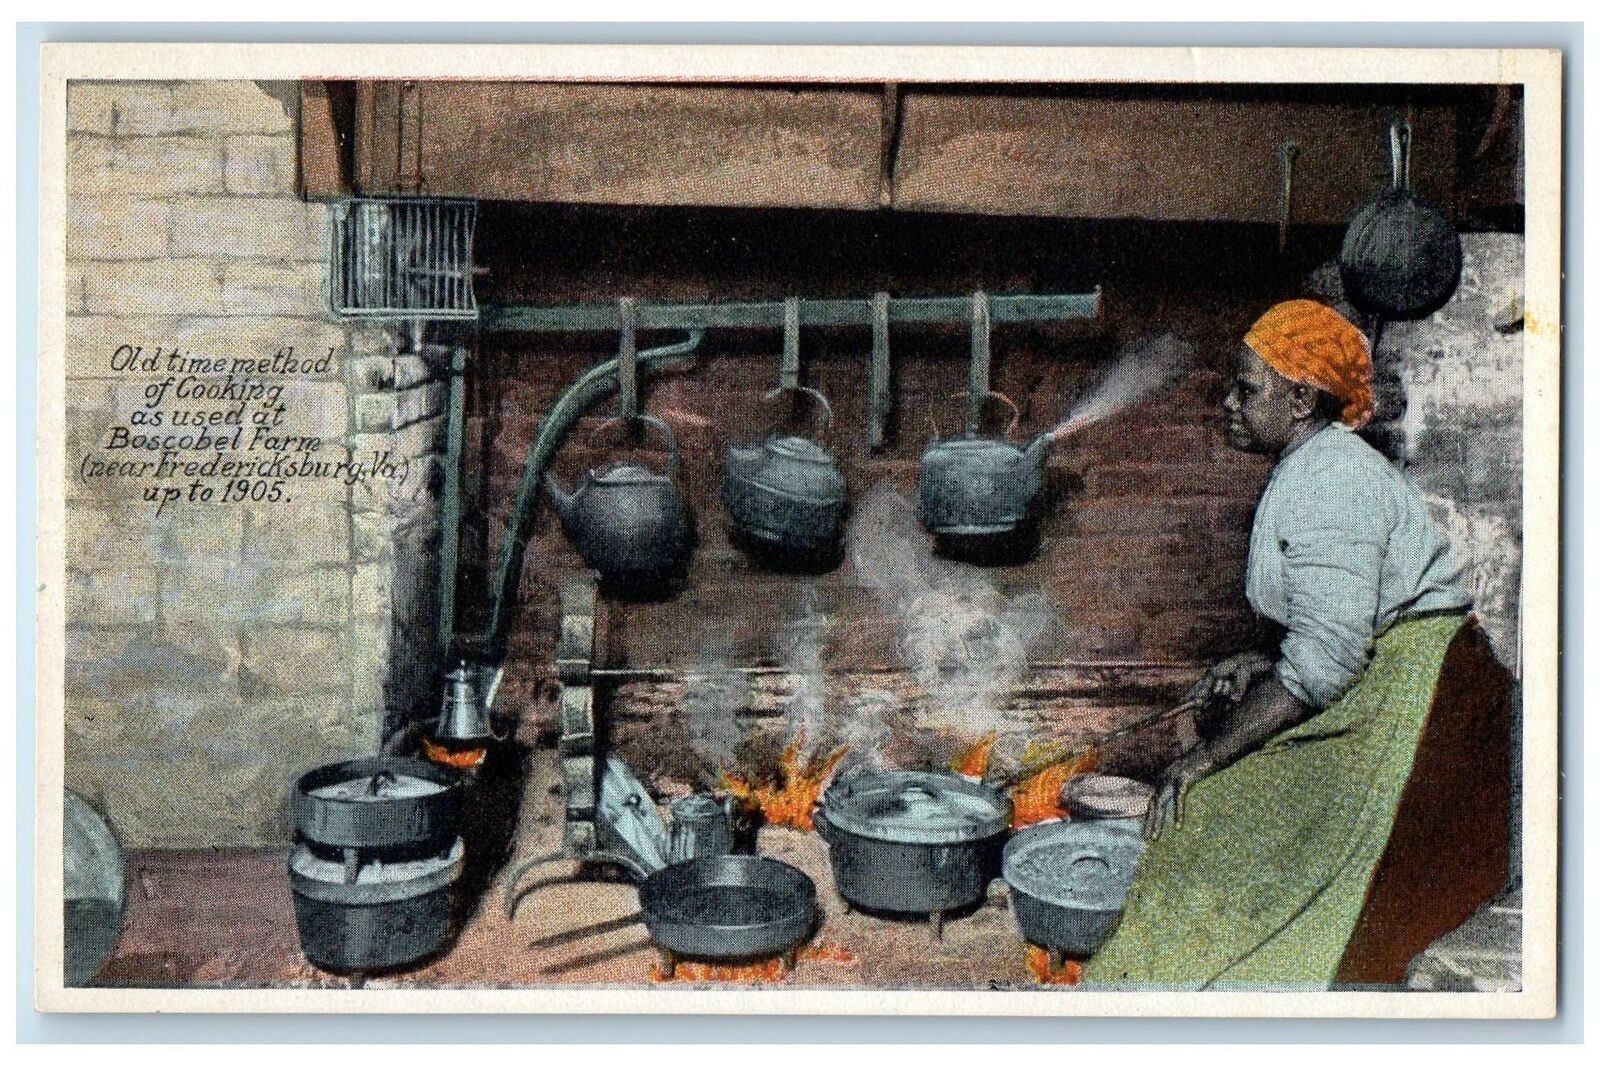 c1940s Old Time Method Cooking As Used Boscobel Farm Fredericksburg VA Postcard